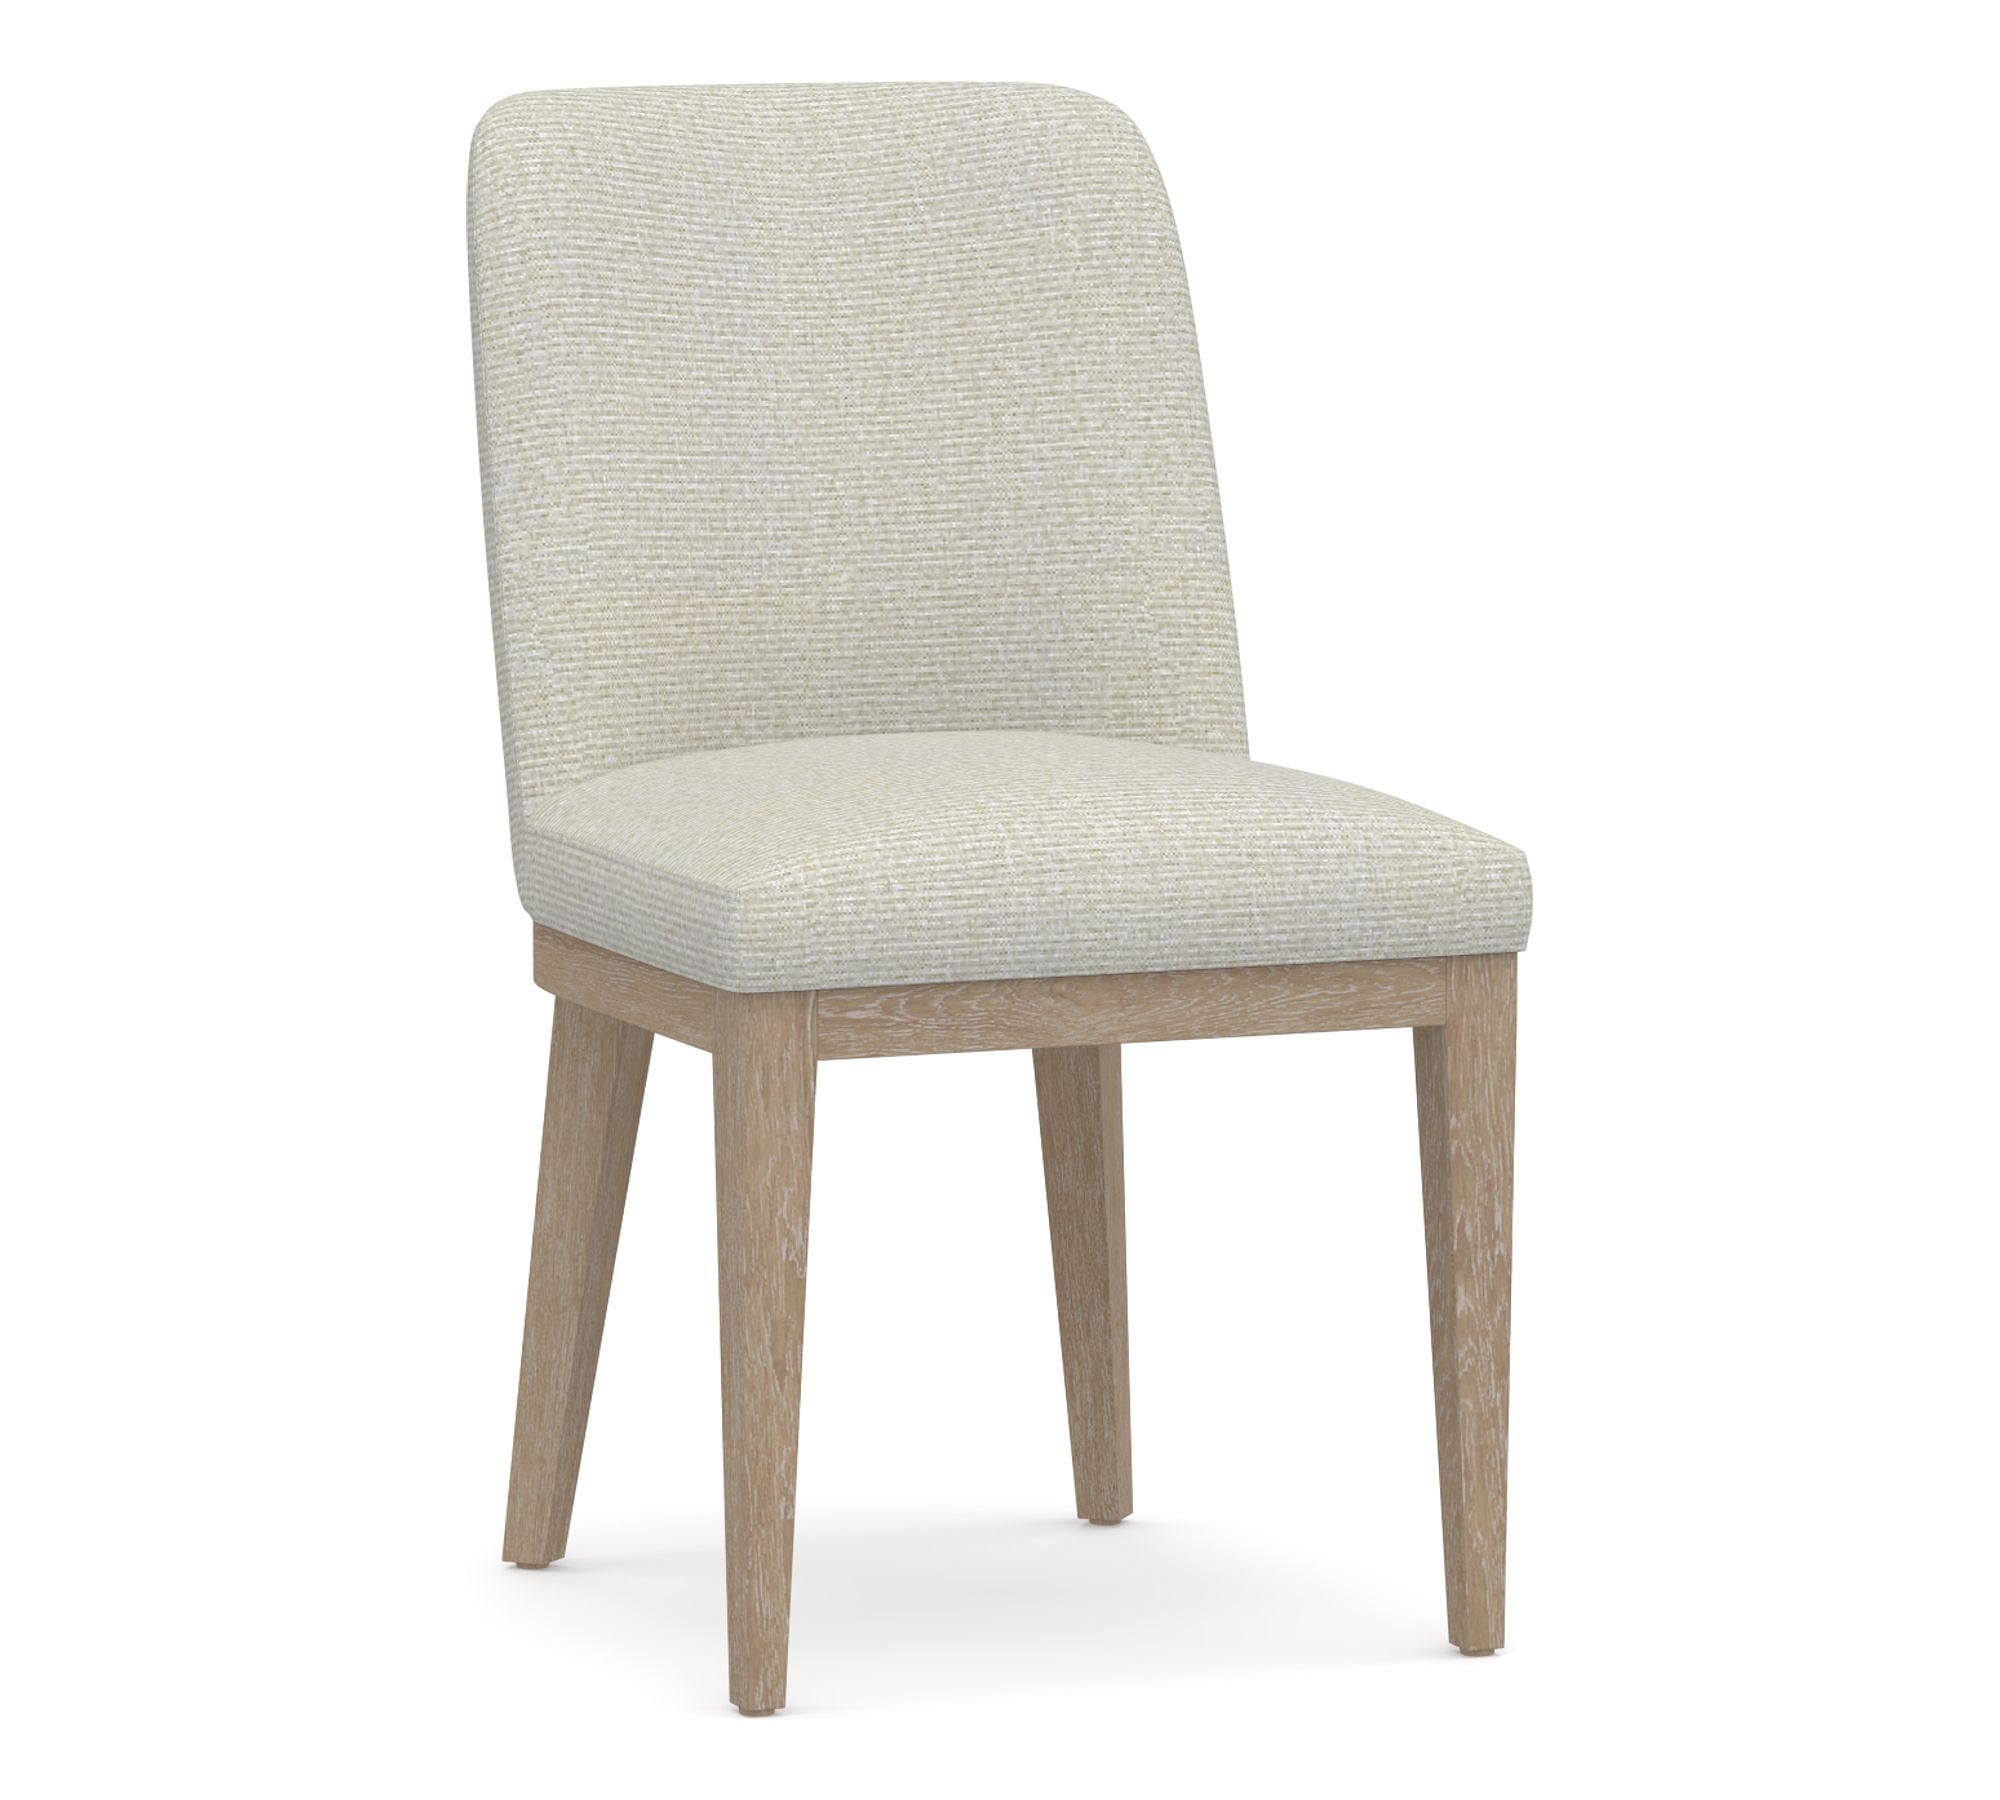 Layton Upholstered Side Dining Chair, Seadrift Legs, Performance Heathered Basketweave Dove - Image 1